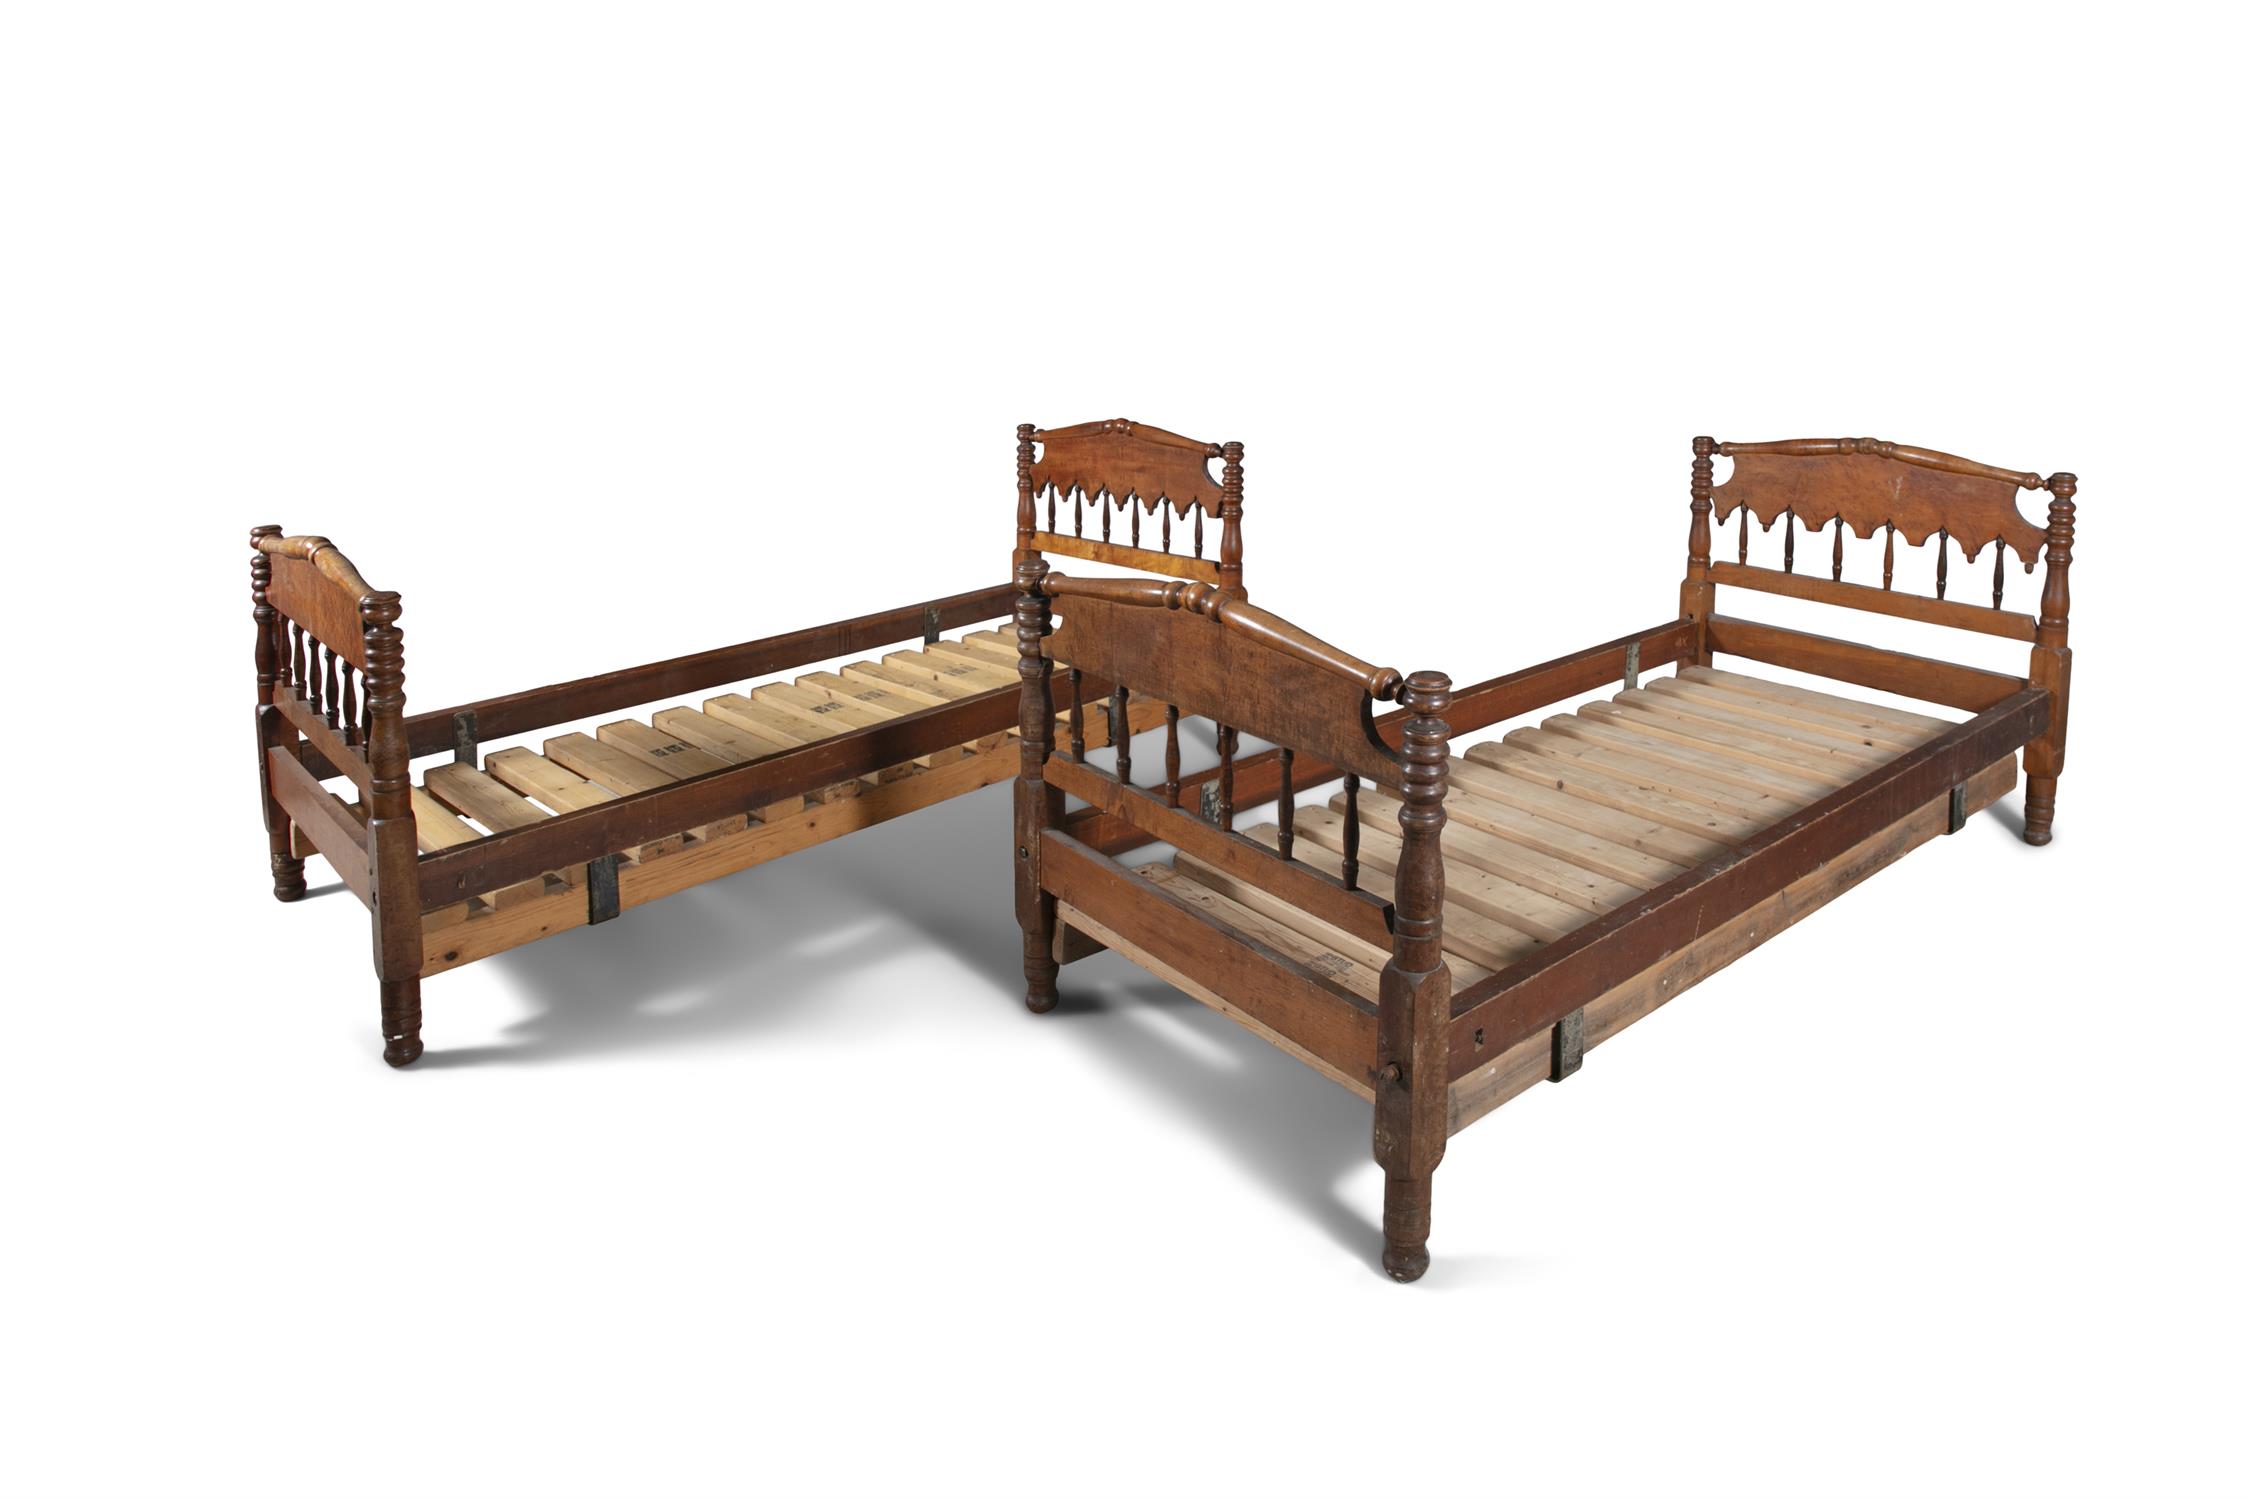 A PAIR OF MAPLE SINGLE BEDS, PHILADELPHIA, 19TH CENTURY 92cm high, 99cm wide, 210cm long - Image 2 of 5